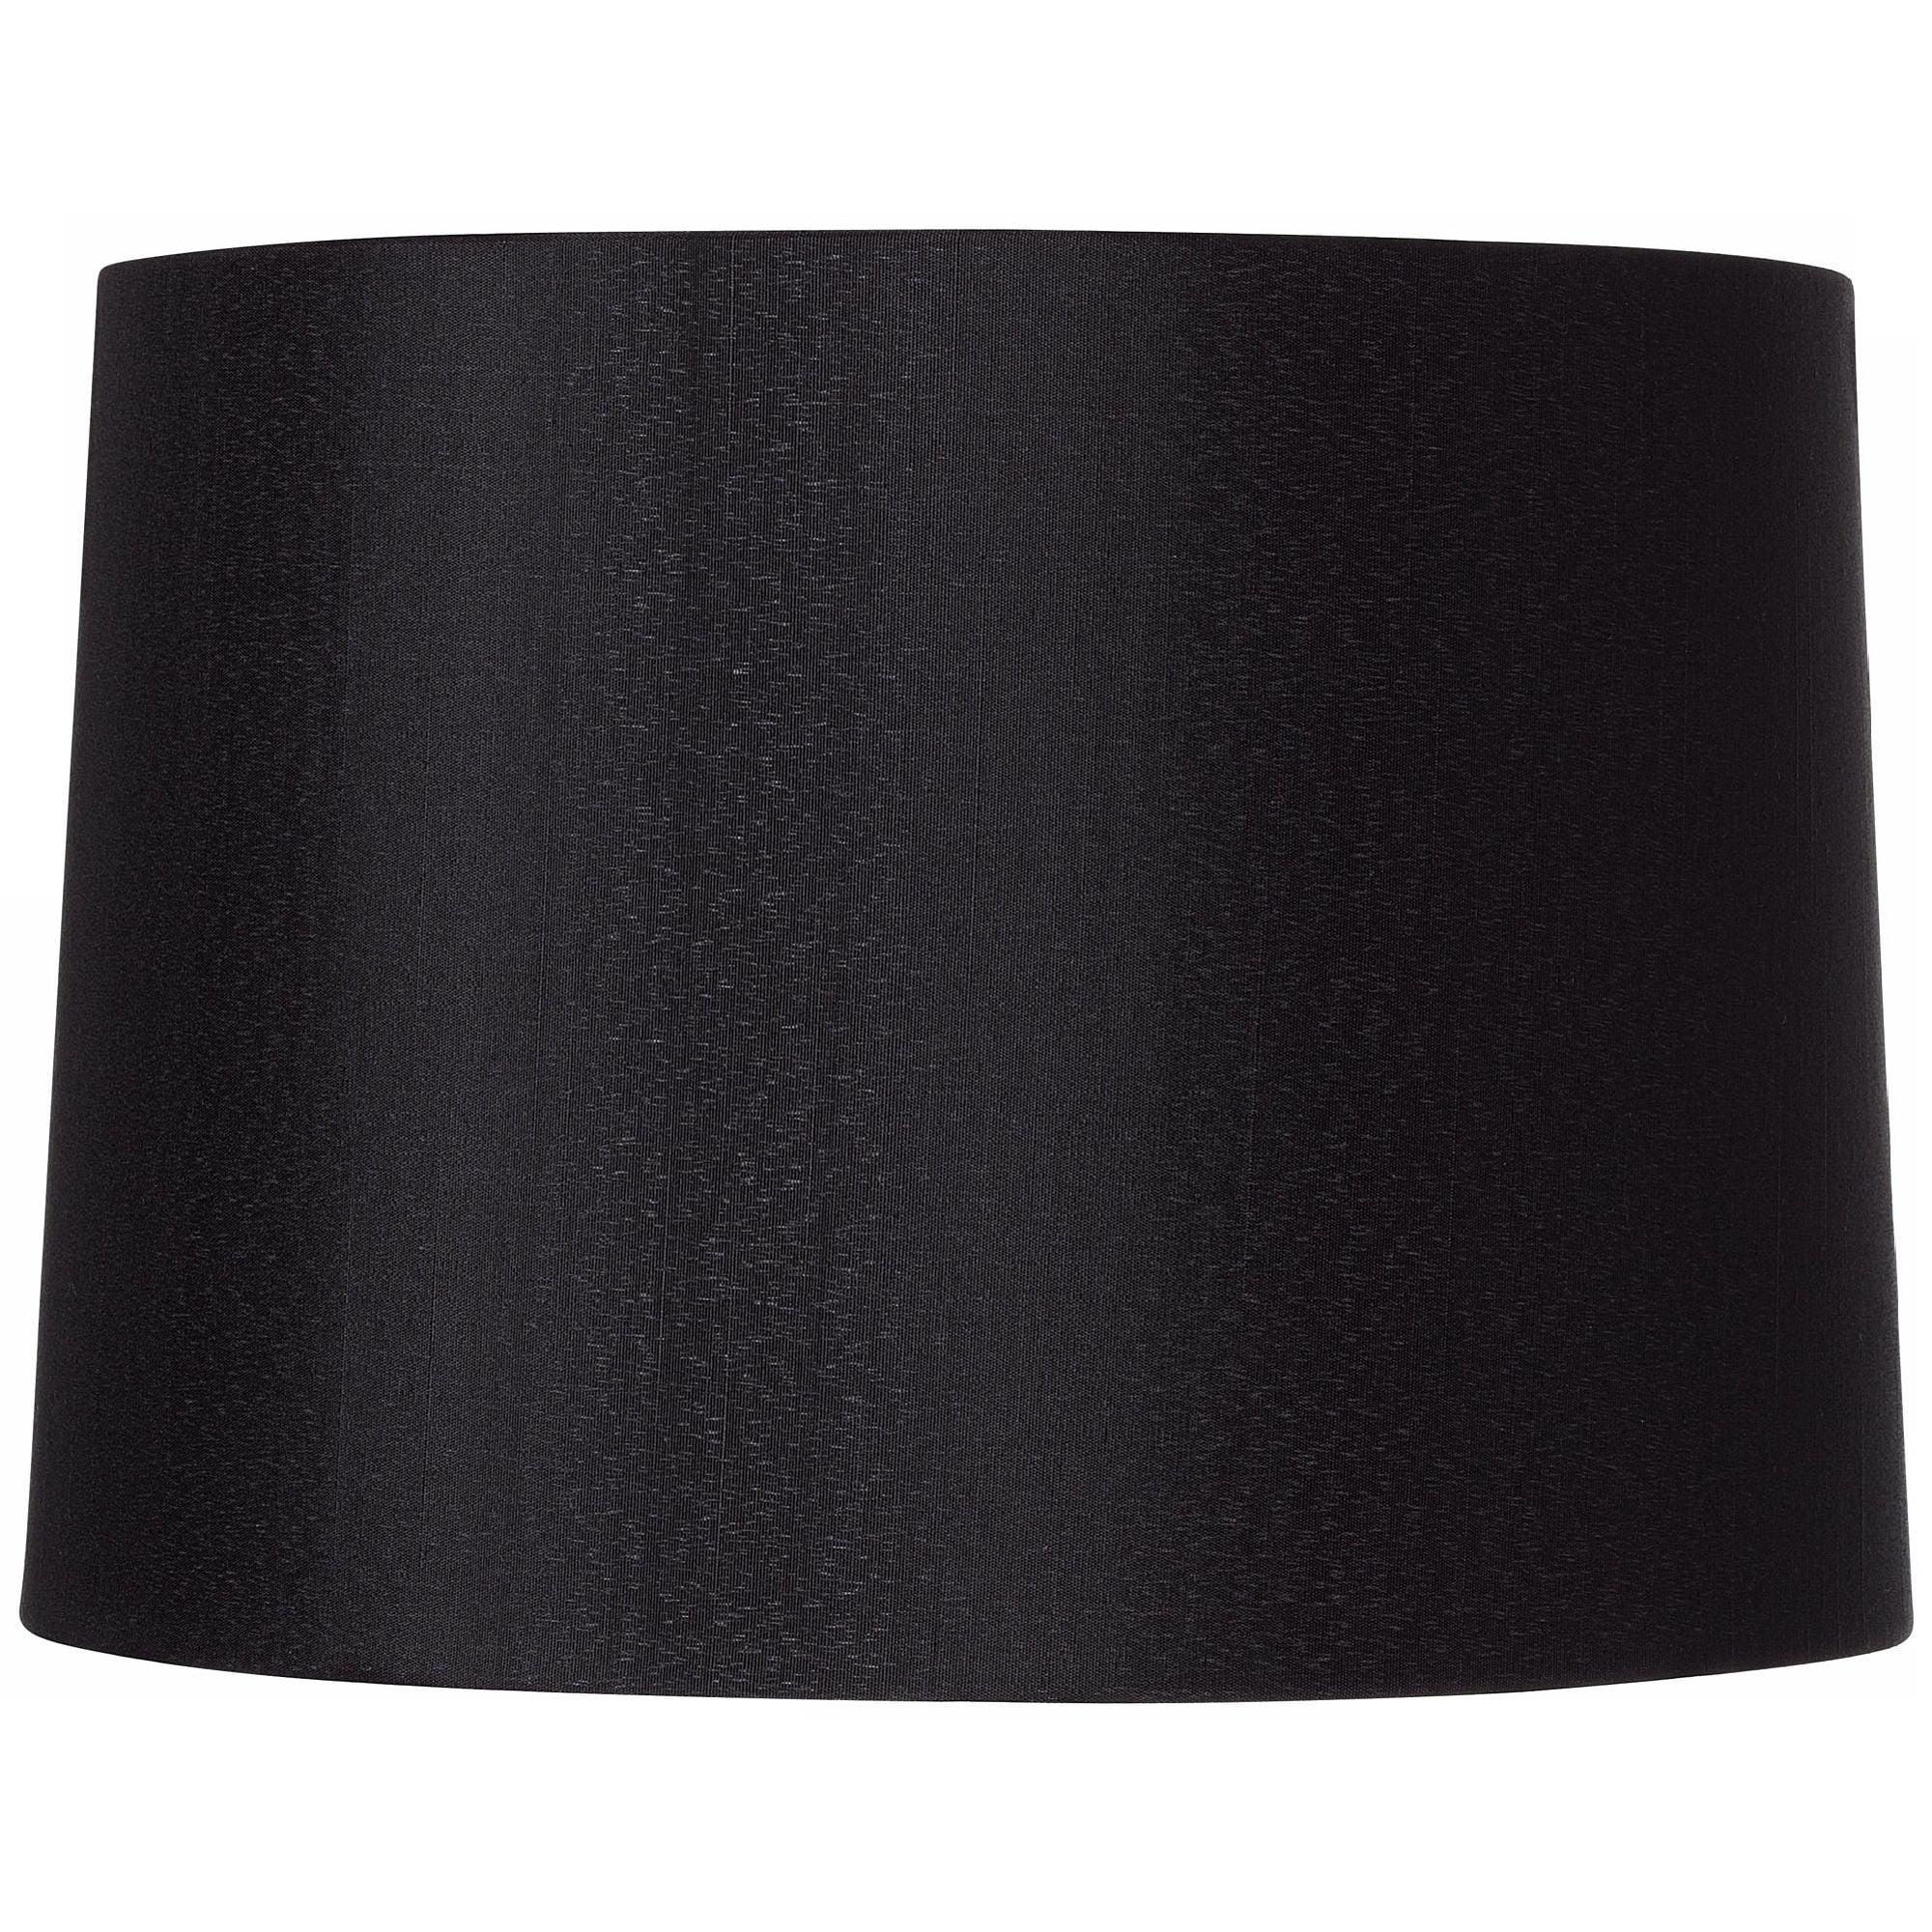 Elegant Black Polyester 14" Drum Lamp Shade with Chrome Fitter